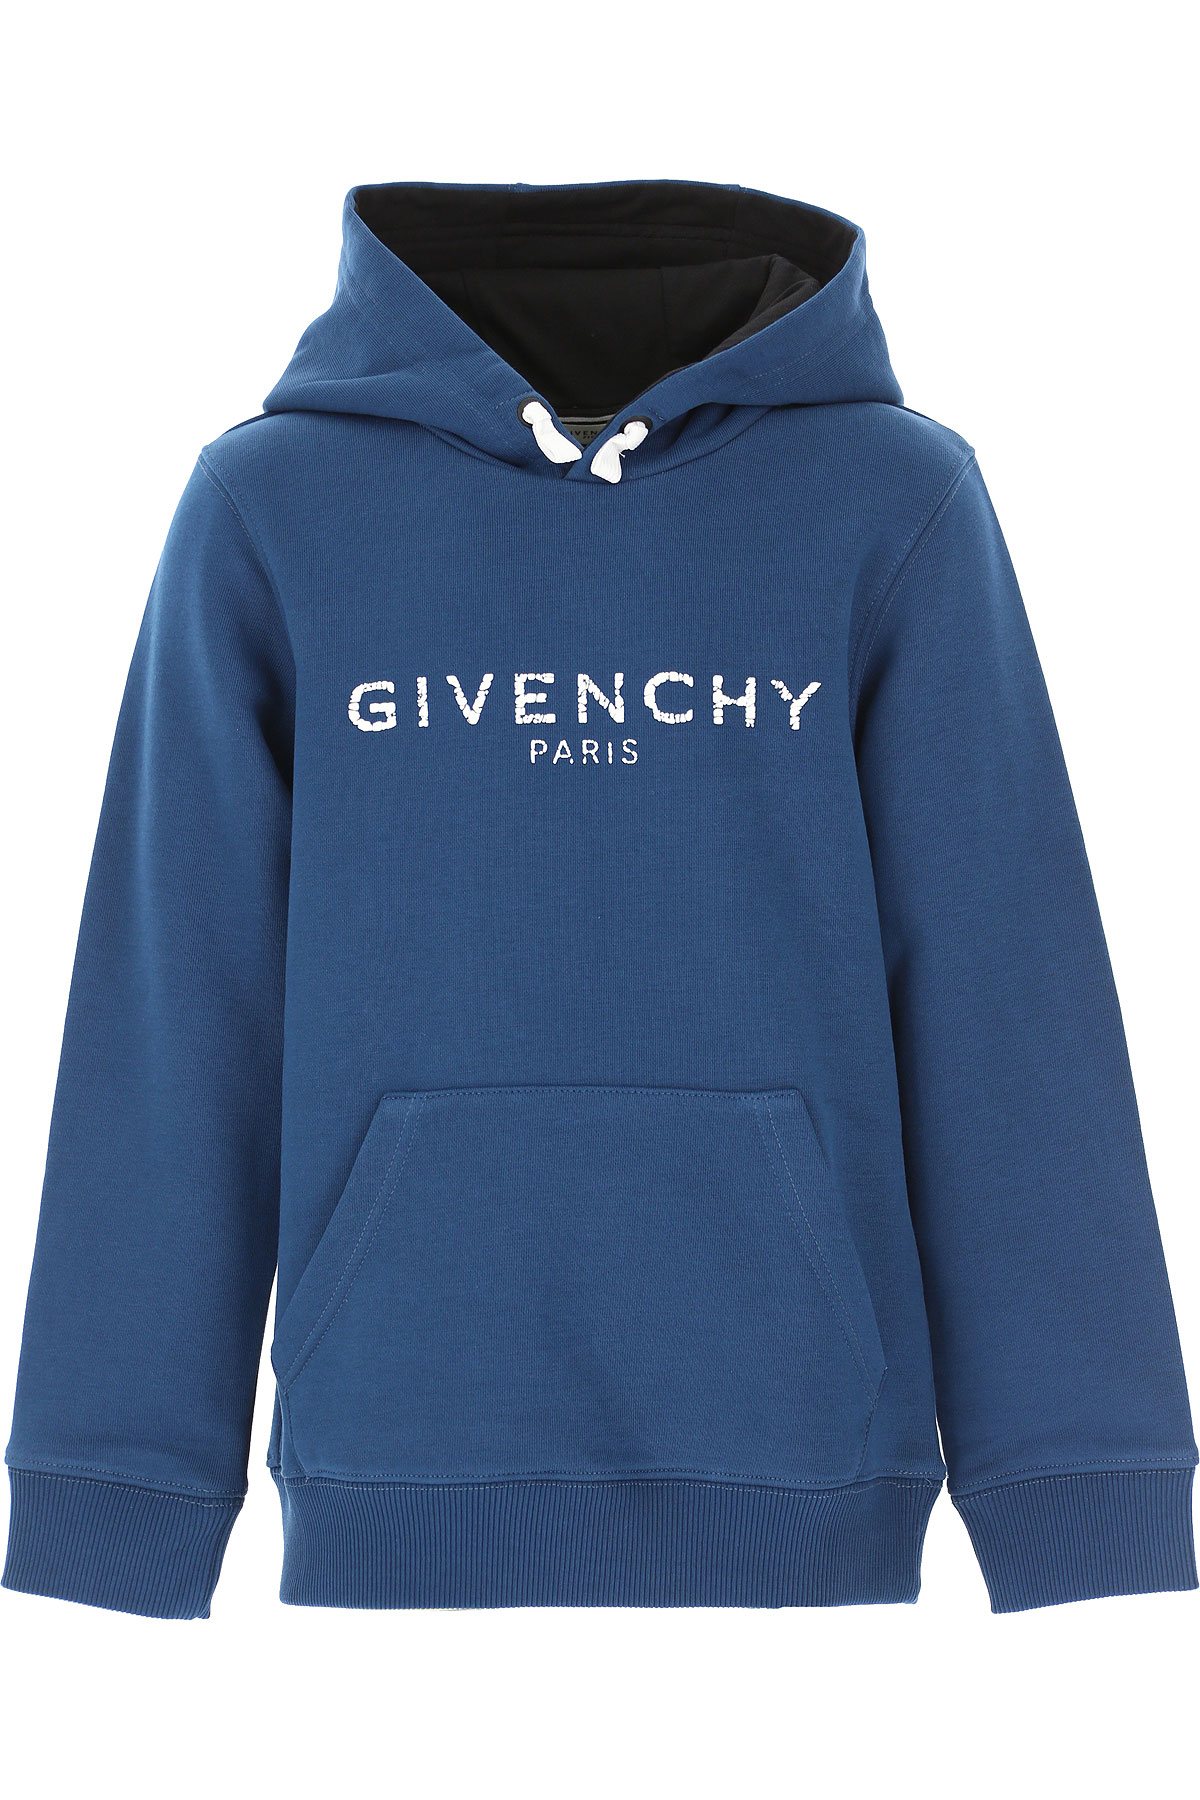 Givenchy Kinder Sweatshirt & Kapuzenpullover für Jungen, Marineblau, Baumwolle, 2017, 10Y 6Y 8Y